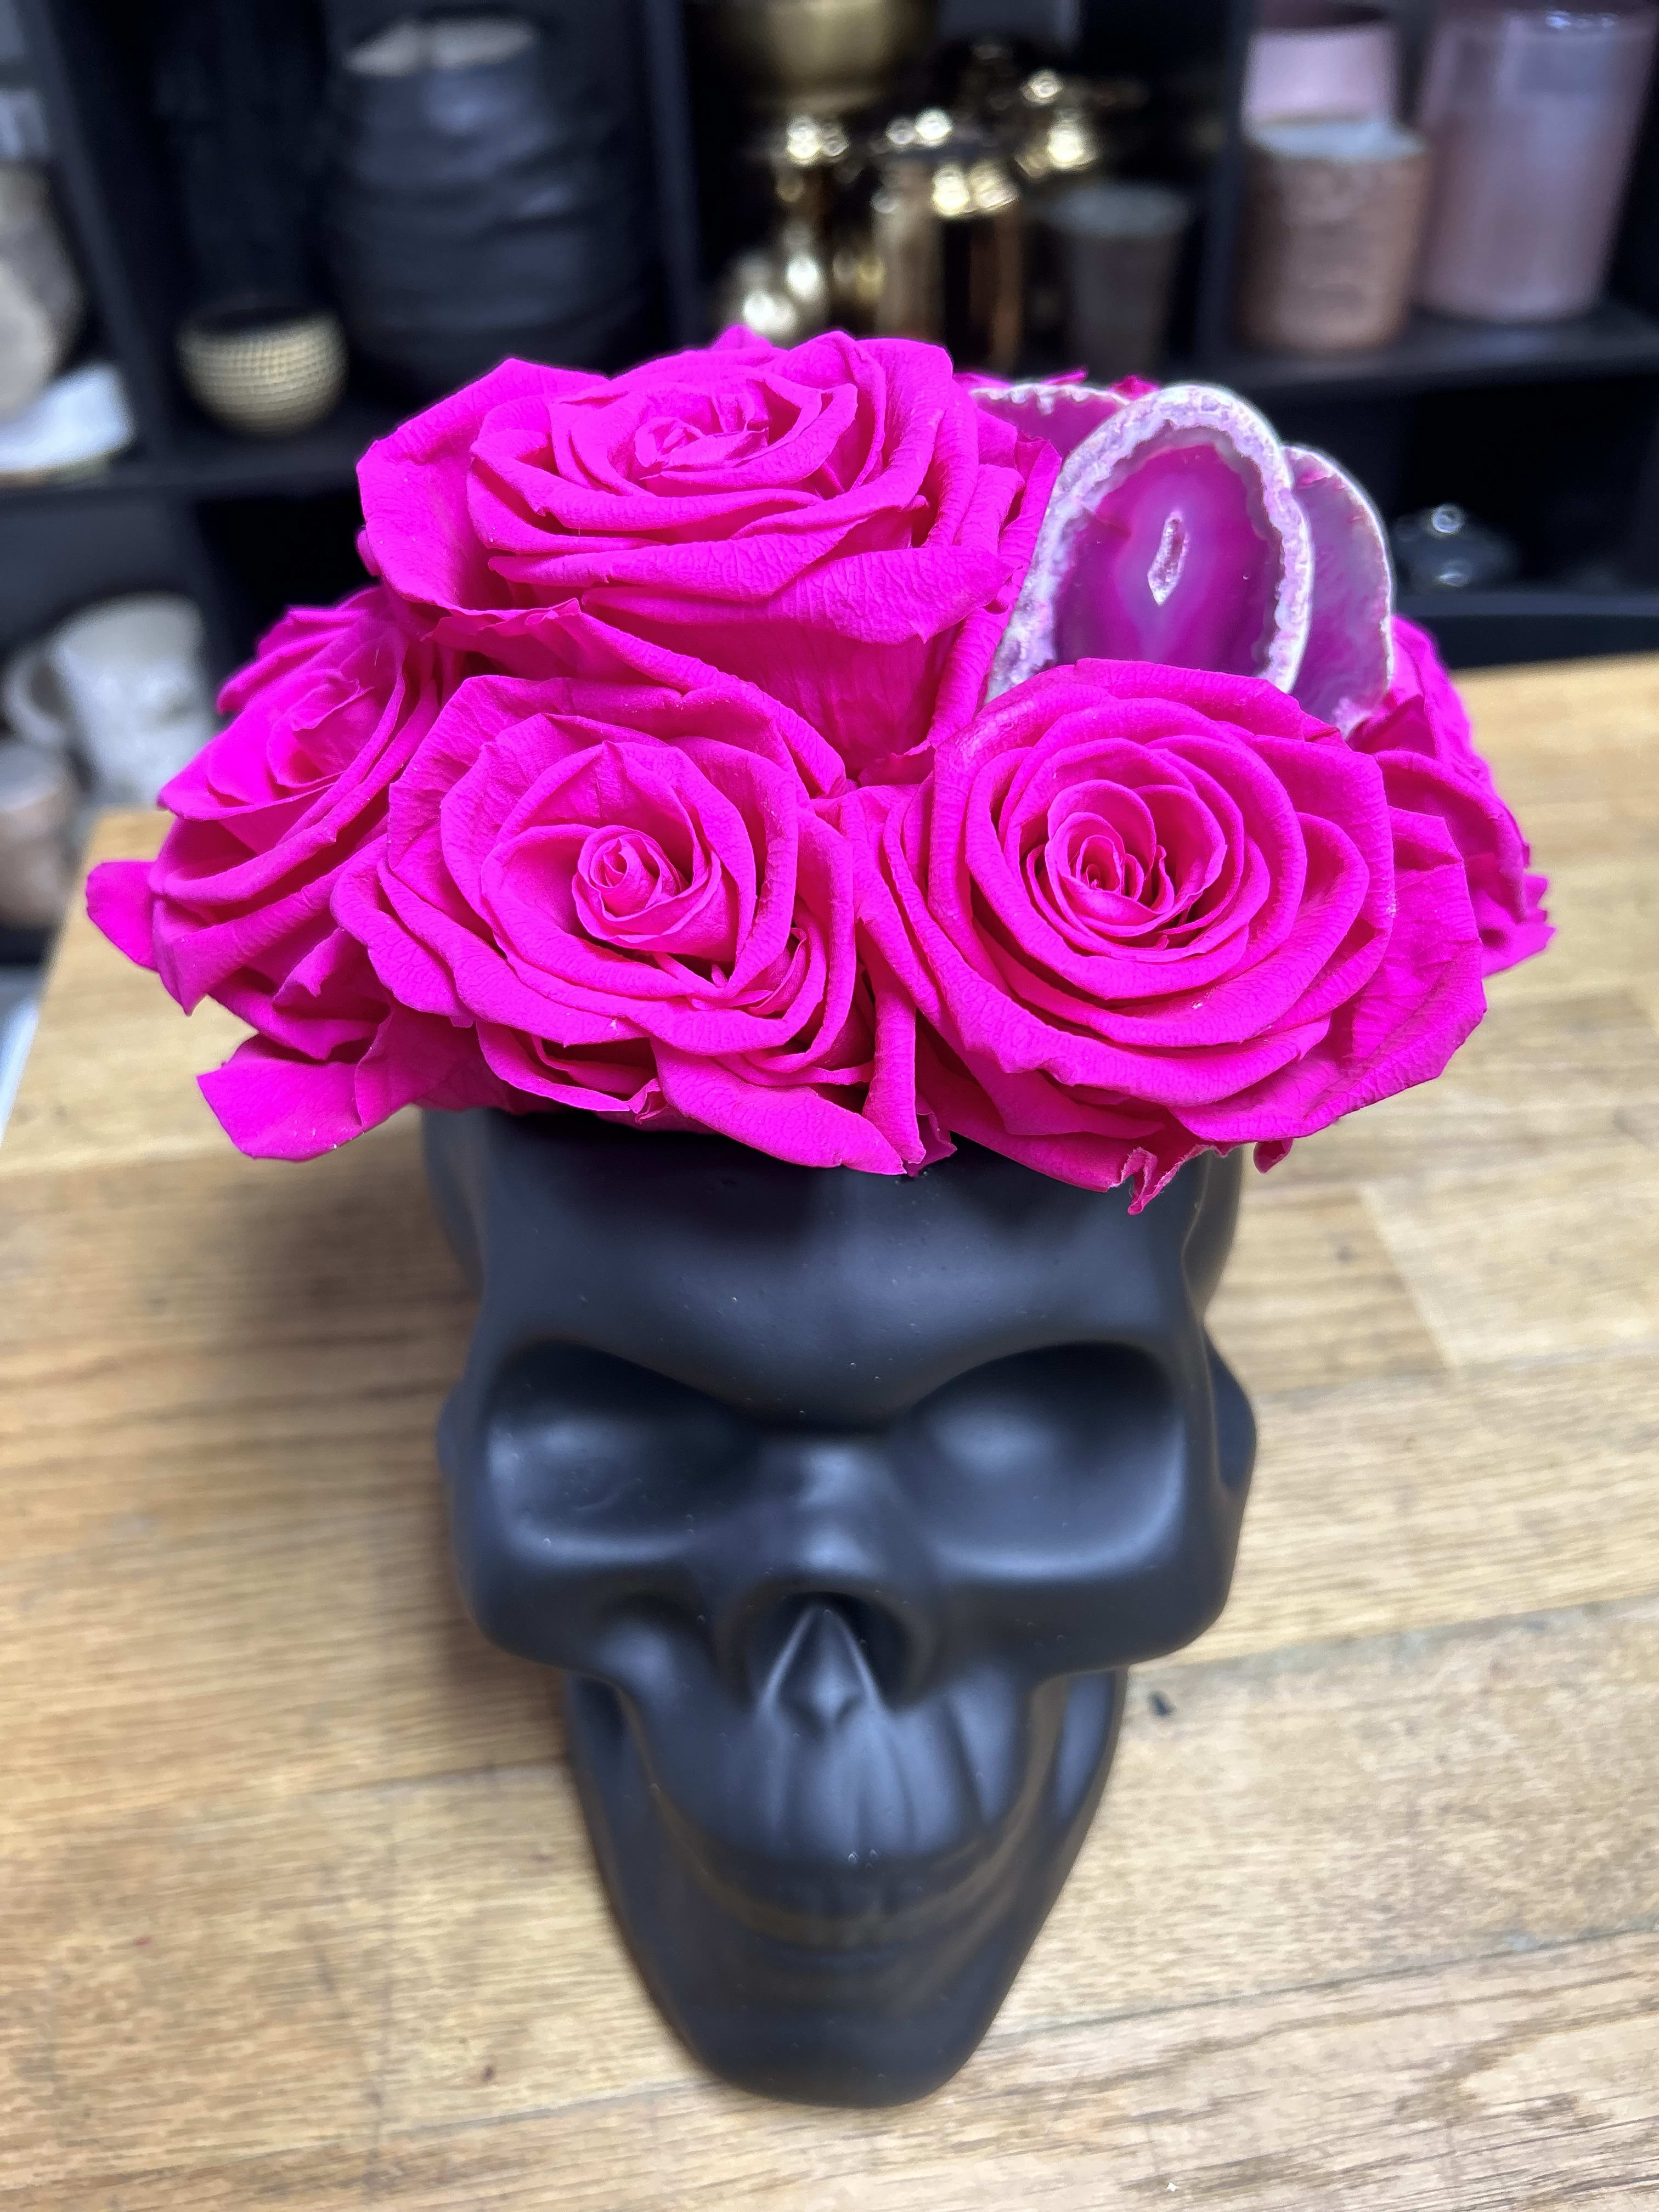 Preserved Roses in Skull Vase - Hot Pink Roses and a geode in skull vase. 8” long by 7.5” 